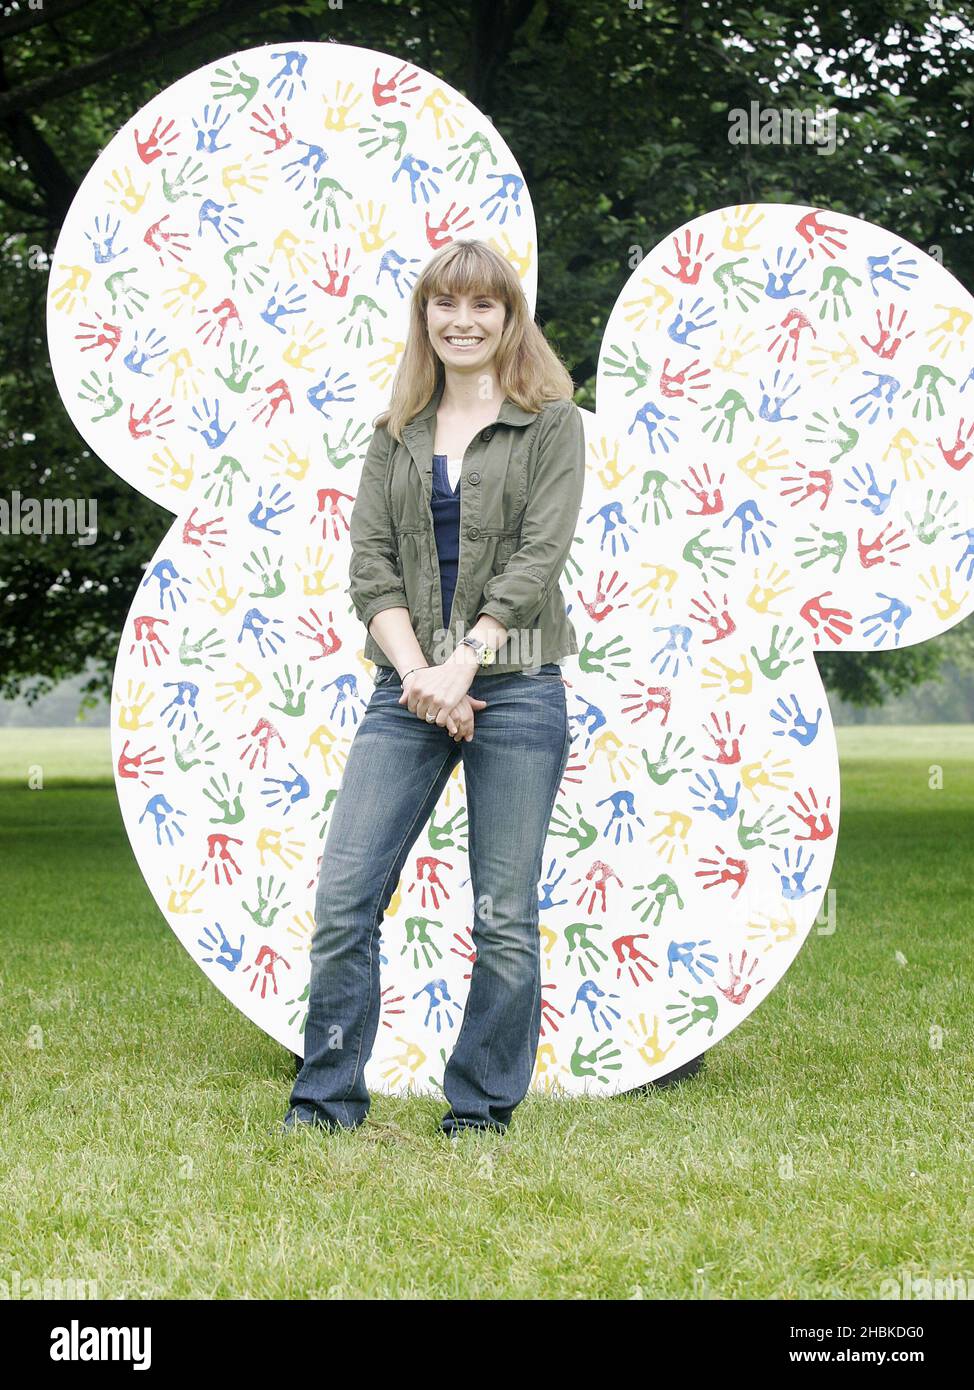 Tana Ramsay launch Playhouse Disney's Plating For Planet Awards, London. Stock Photo